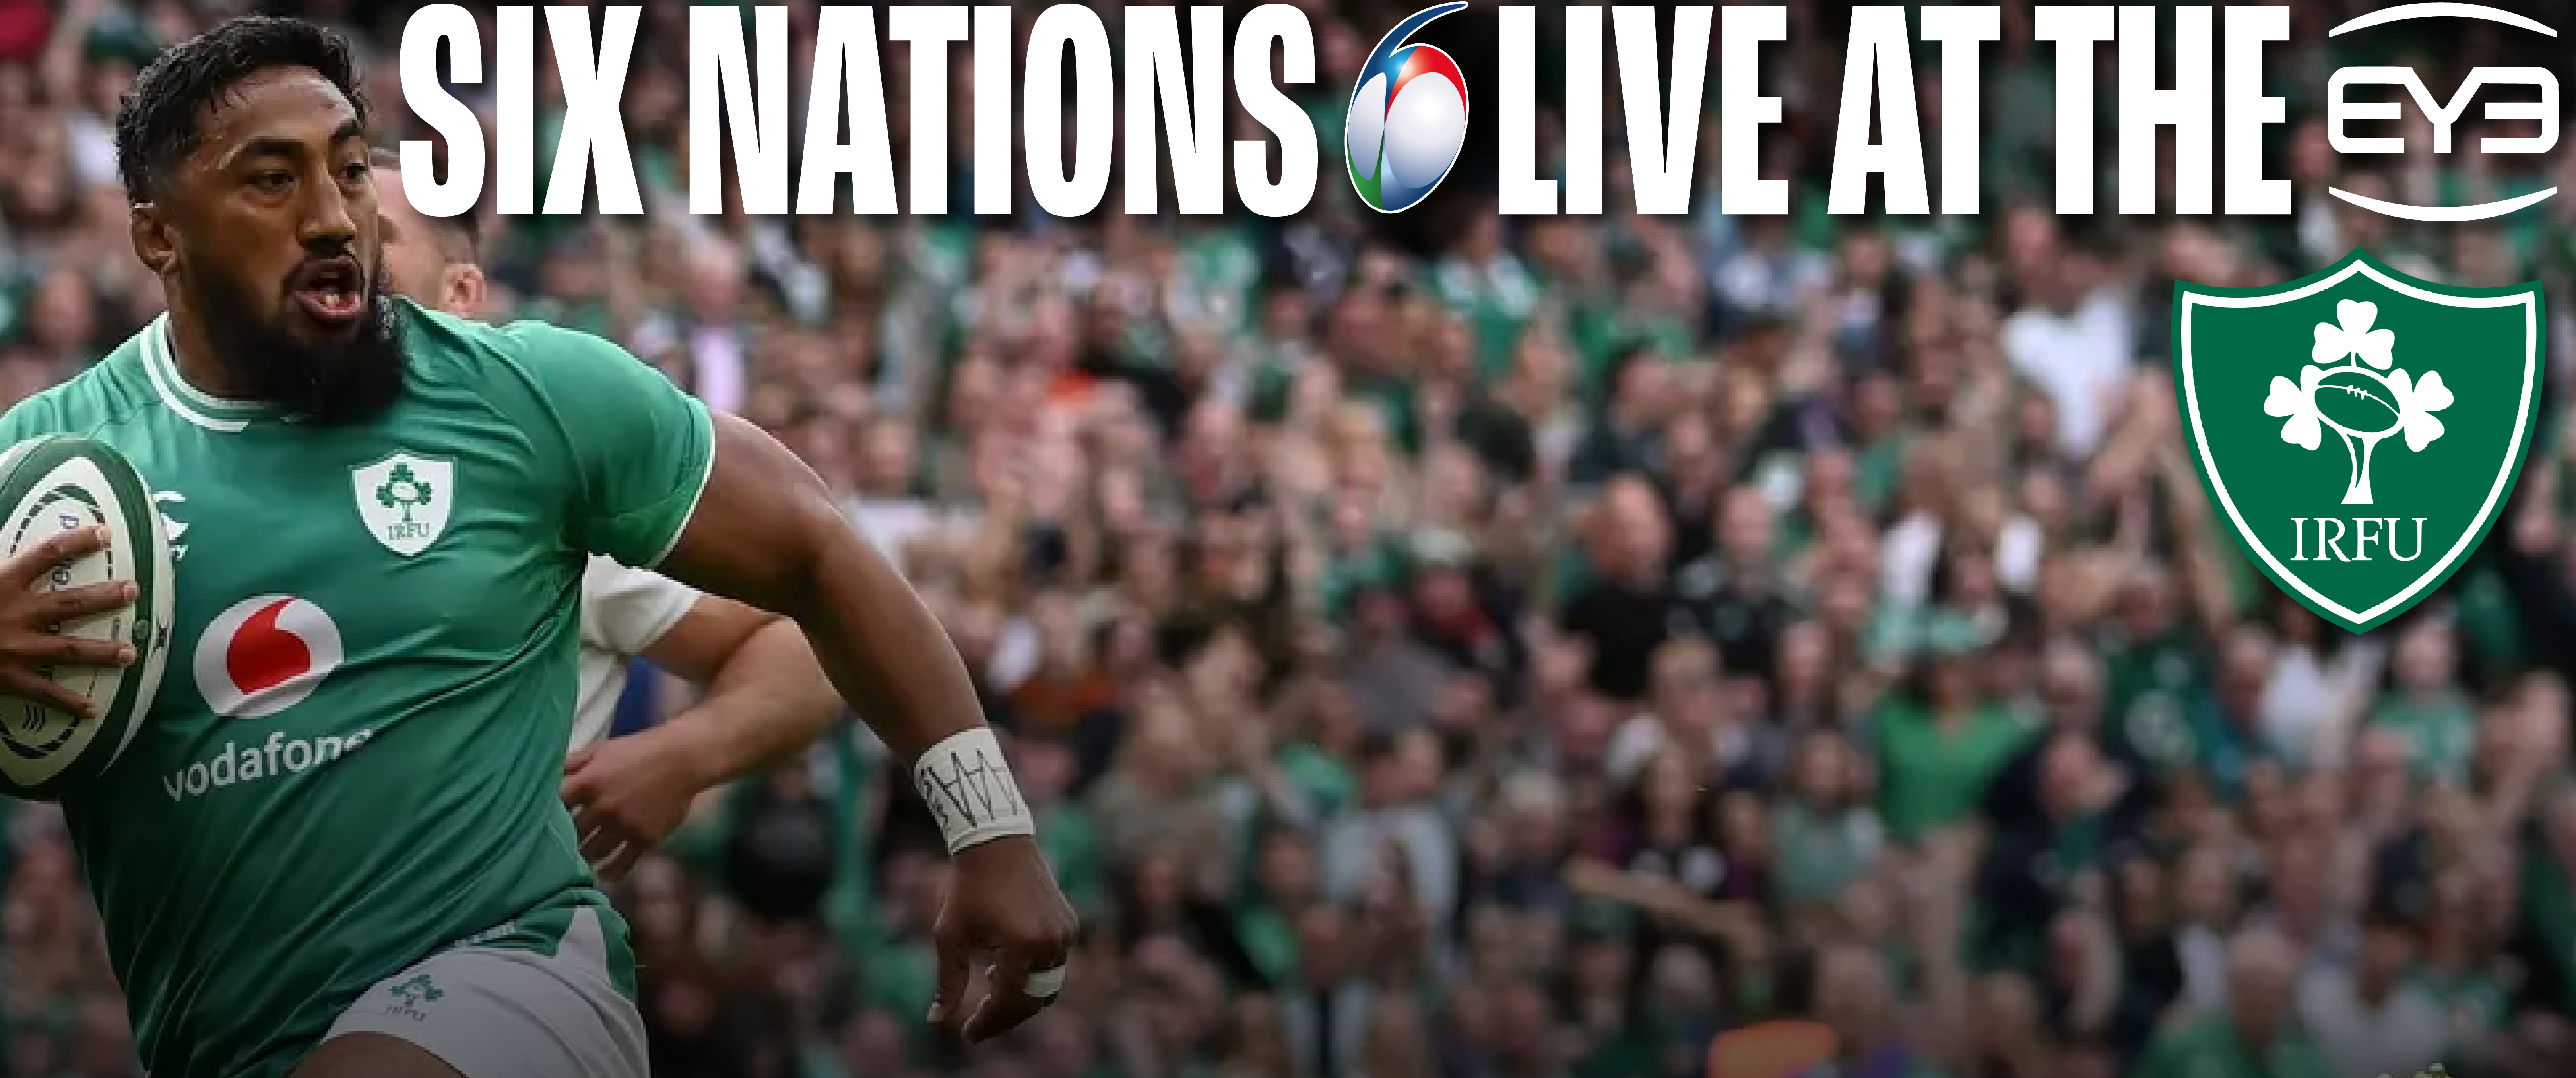 Six Nations LIVE - Ireland vs Scotland